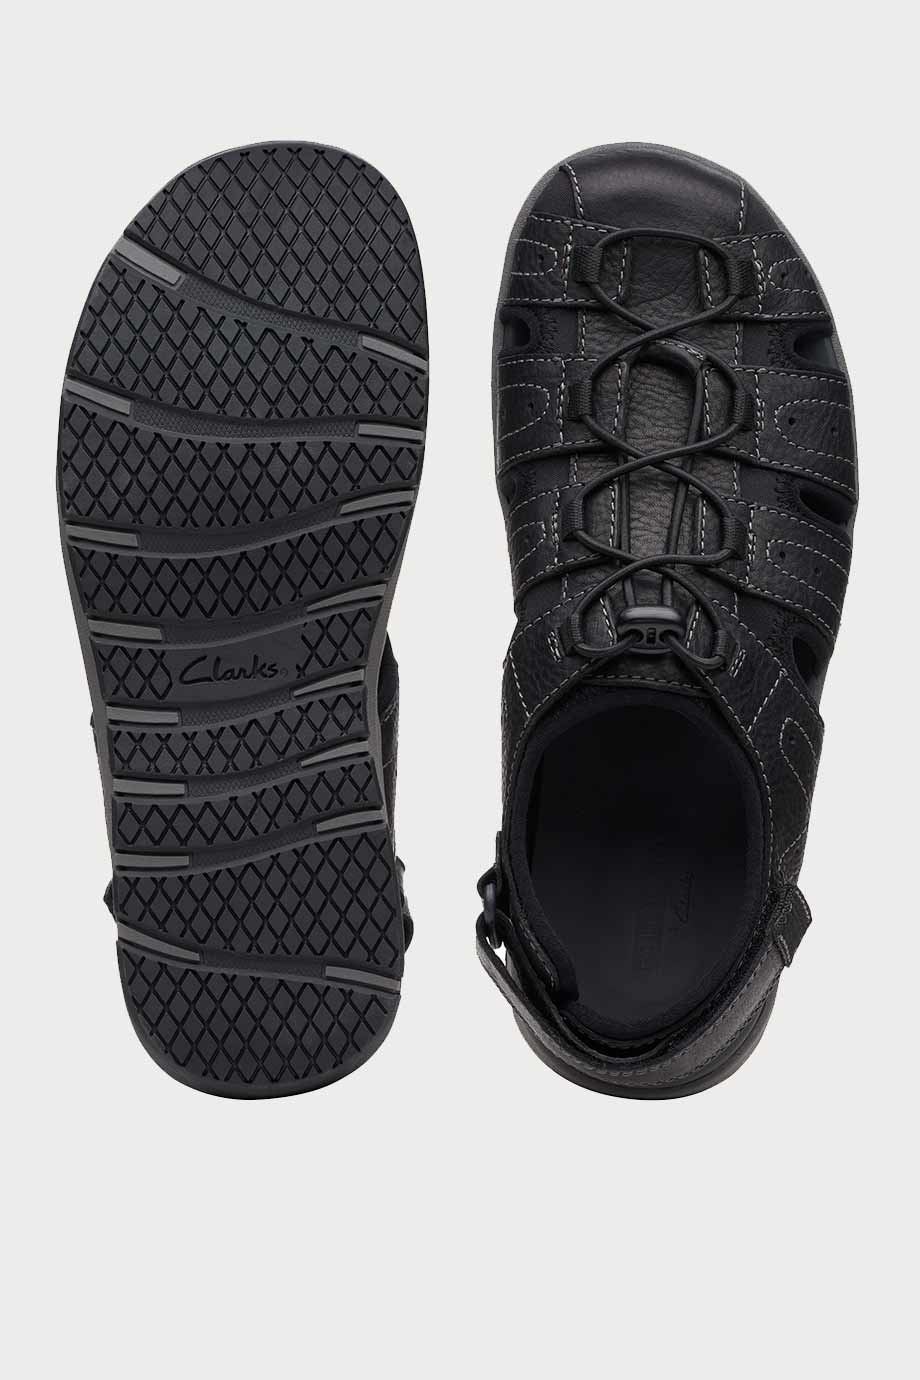 spiridoula metheniti shoes xalkida p Brixby Cove clarks black leather 7